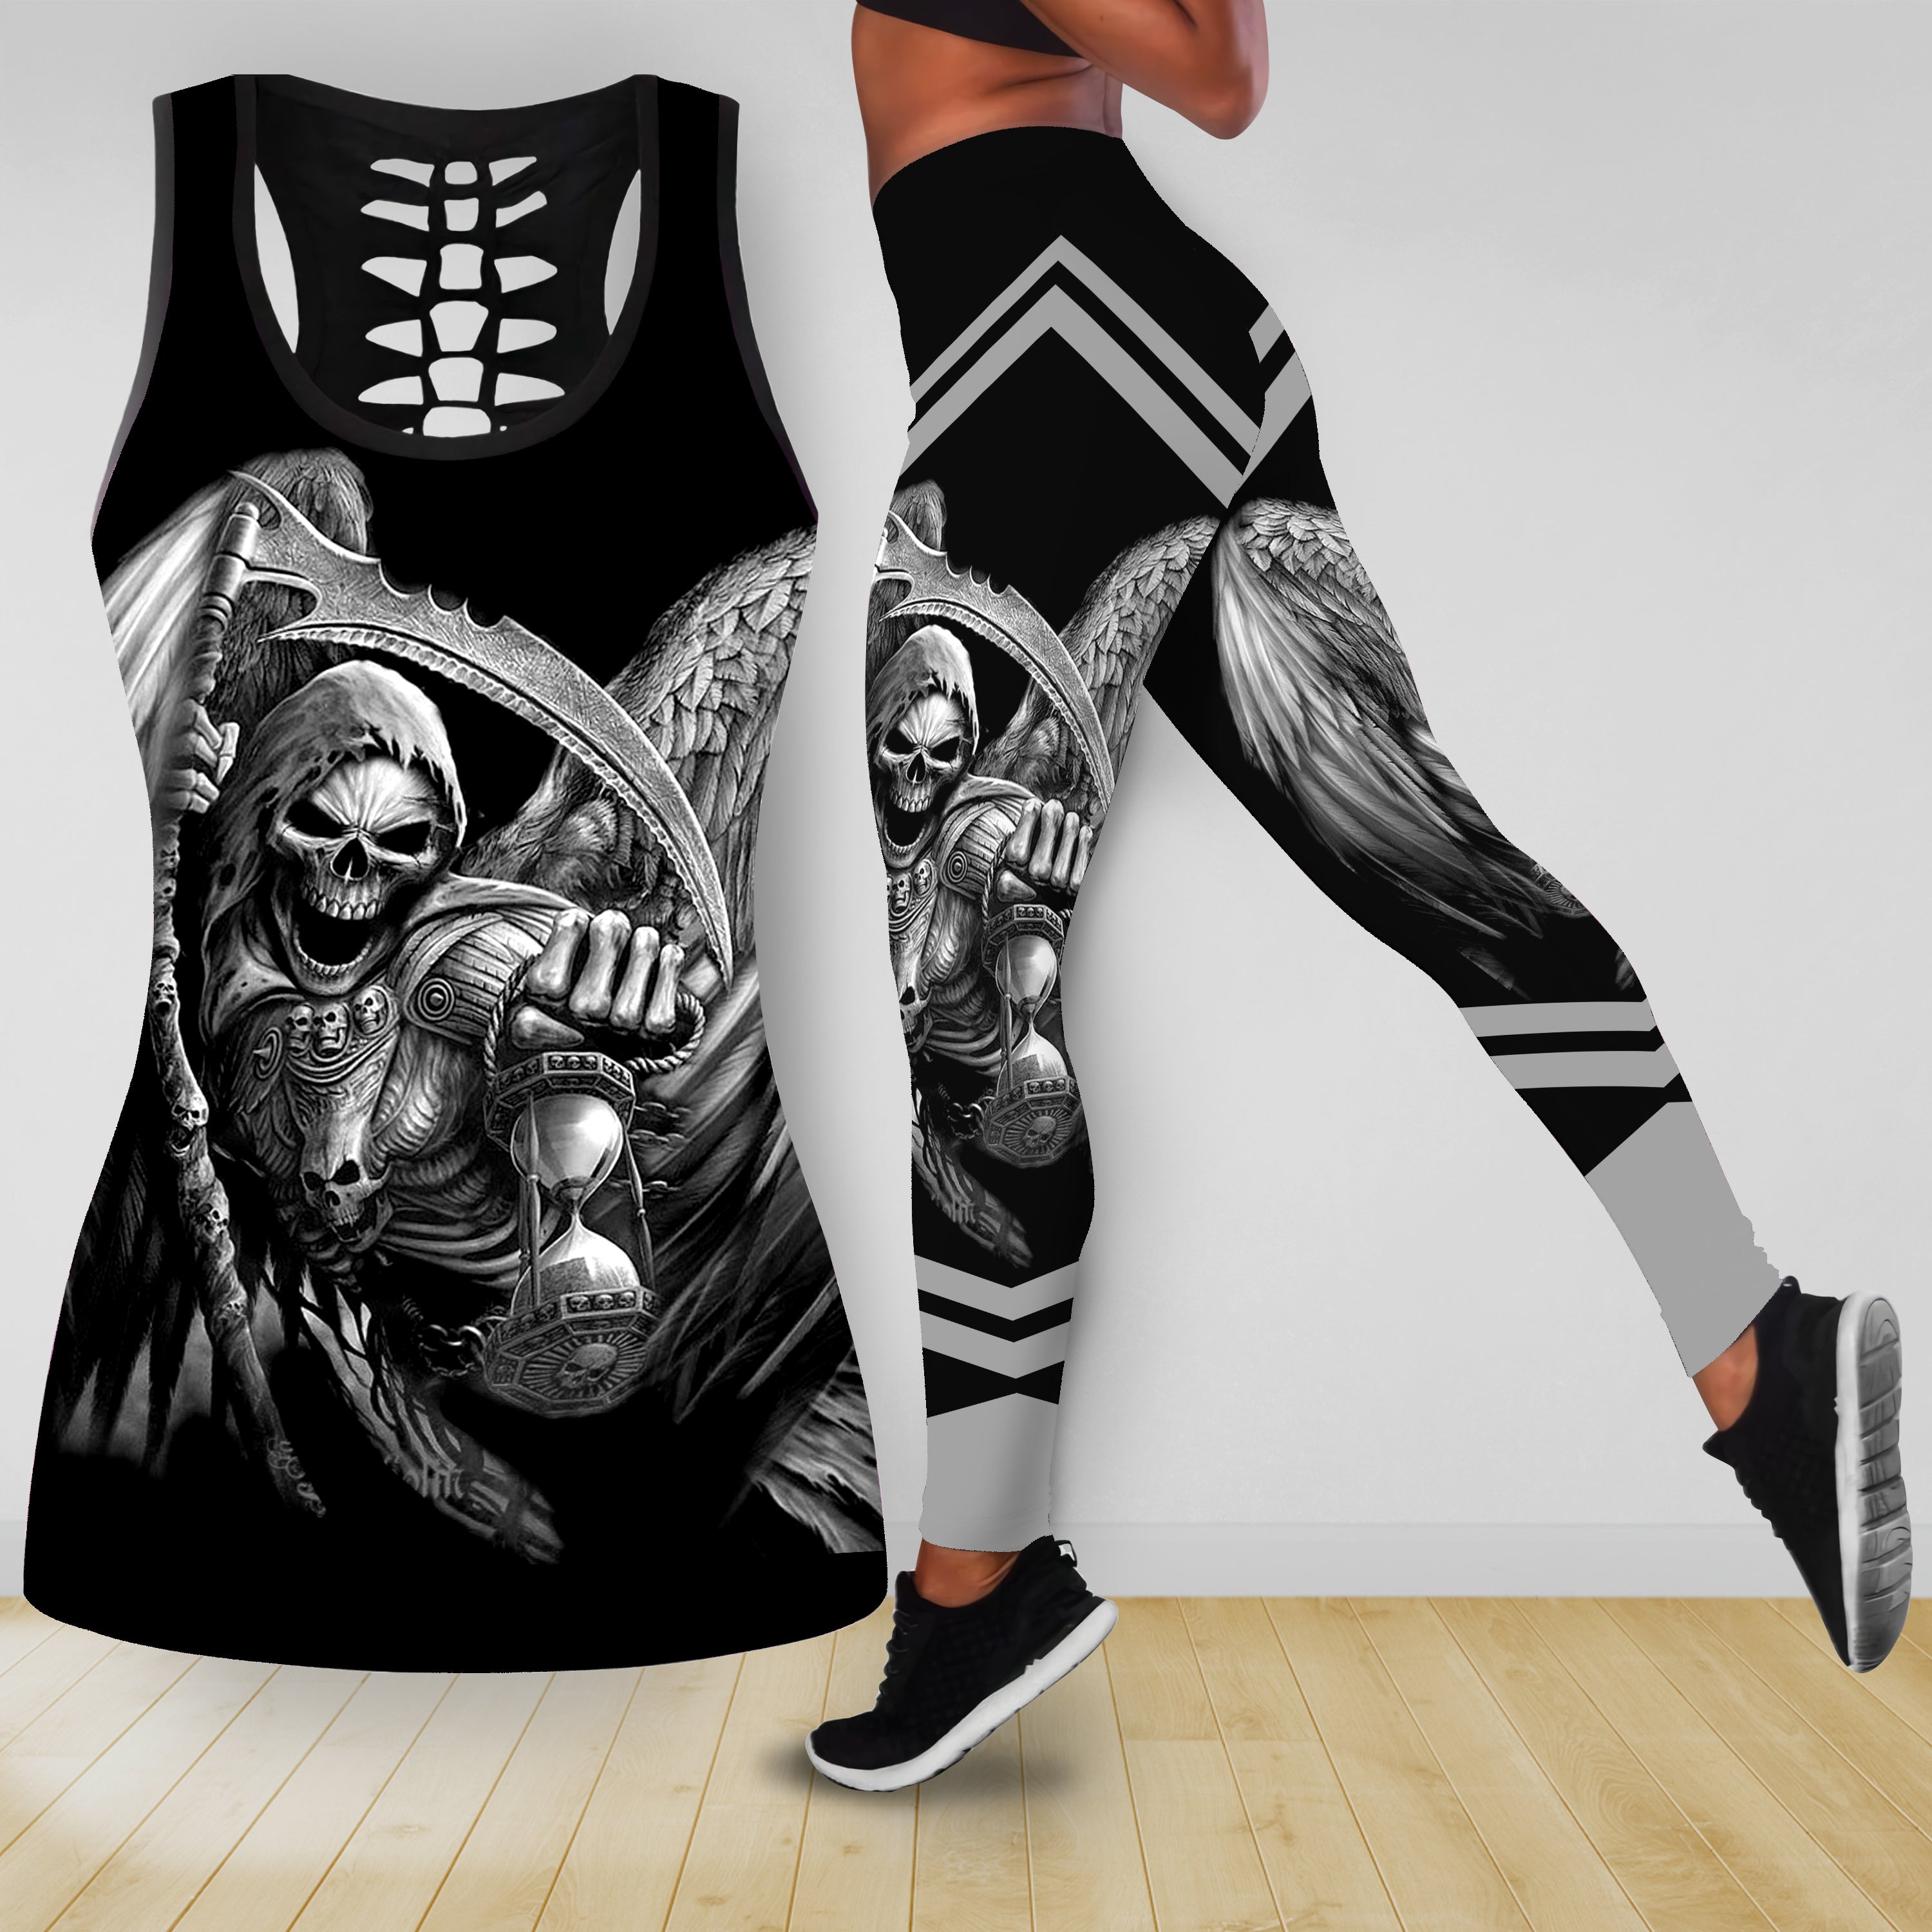 Grim Reaper Skull Tattoo Combo Legging Tank Top 09856